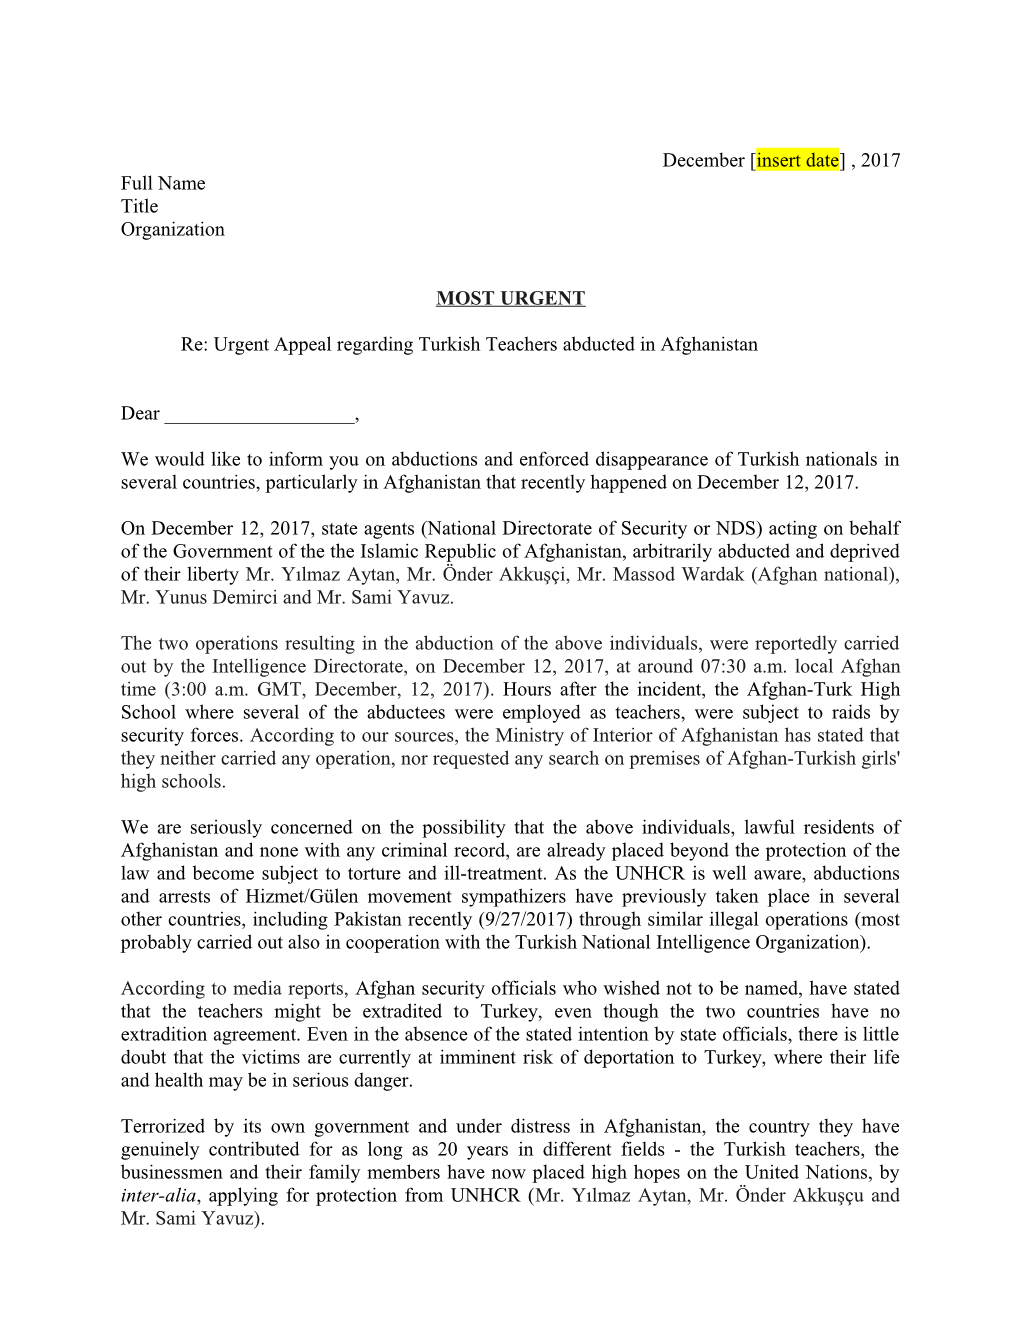 Re: Urgent Appeal Regarding Turkish Teachers Abducted in Afghanistan